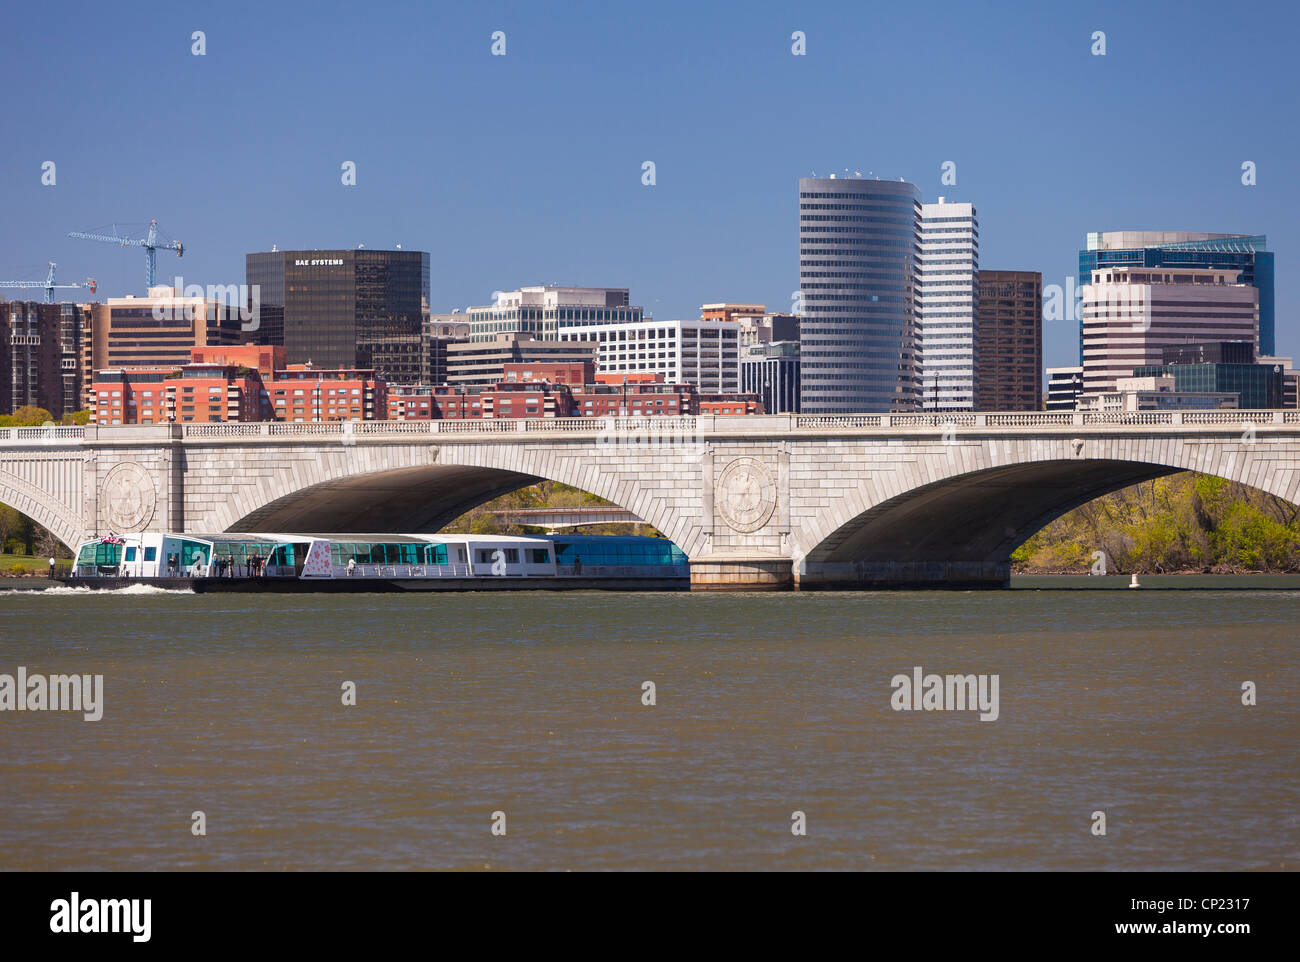 WASHINGTON, DC, USA - Potomac River cruise ship Odyssey. Memorial Bridge et Rosslyn, VA d'horizon. Banque D'Images